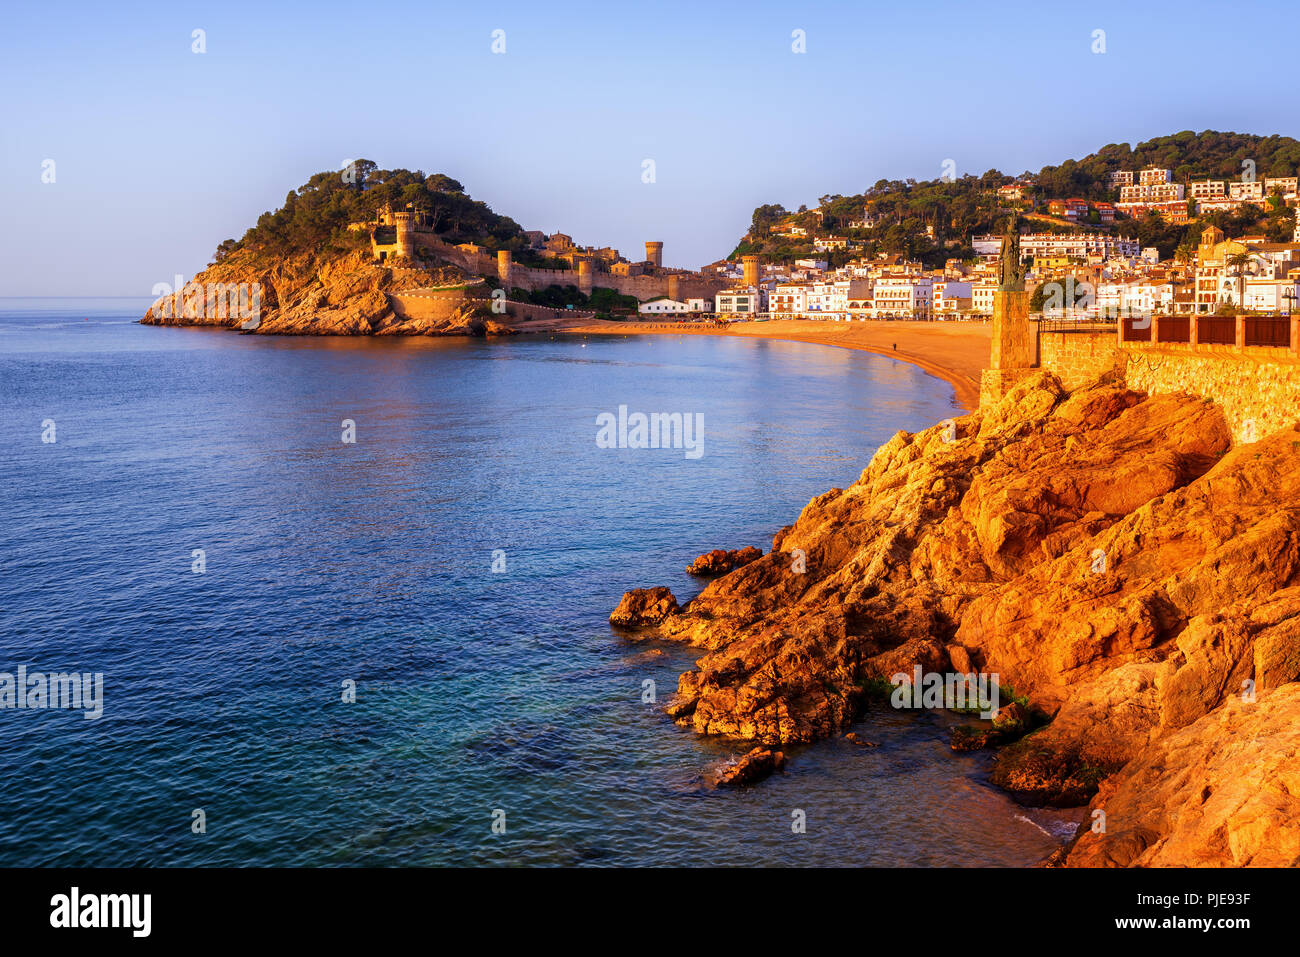 Tossa de Mar, a popular resort town on Costa Brava mediterranean coast, Catalonia, Spain, on sunrise Stock Photo